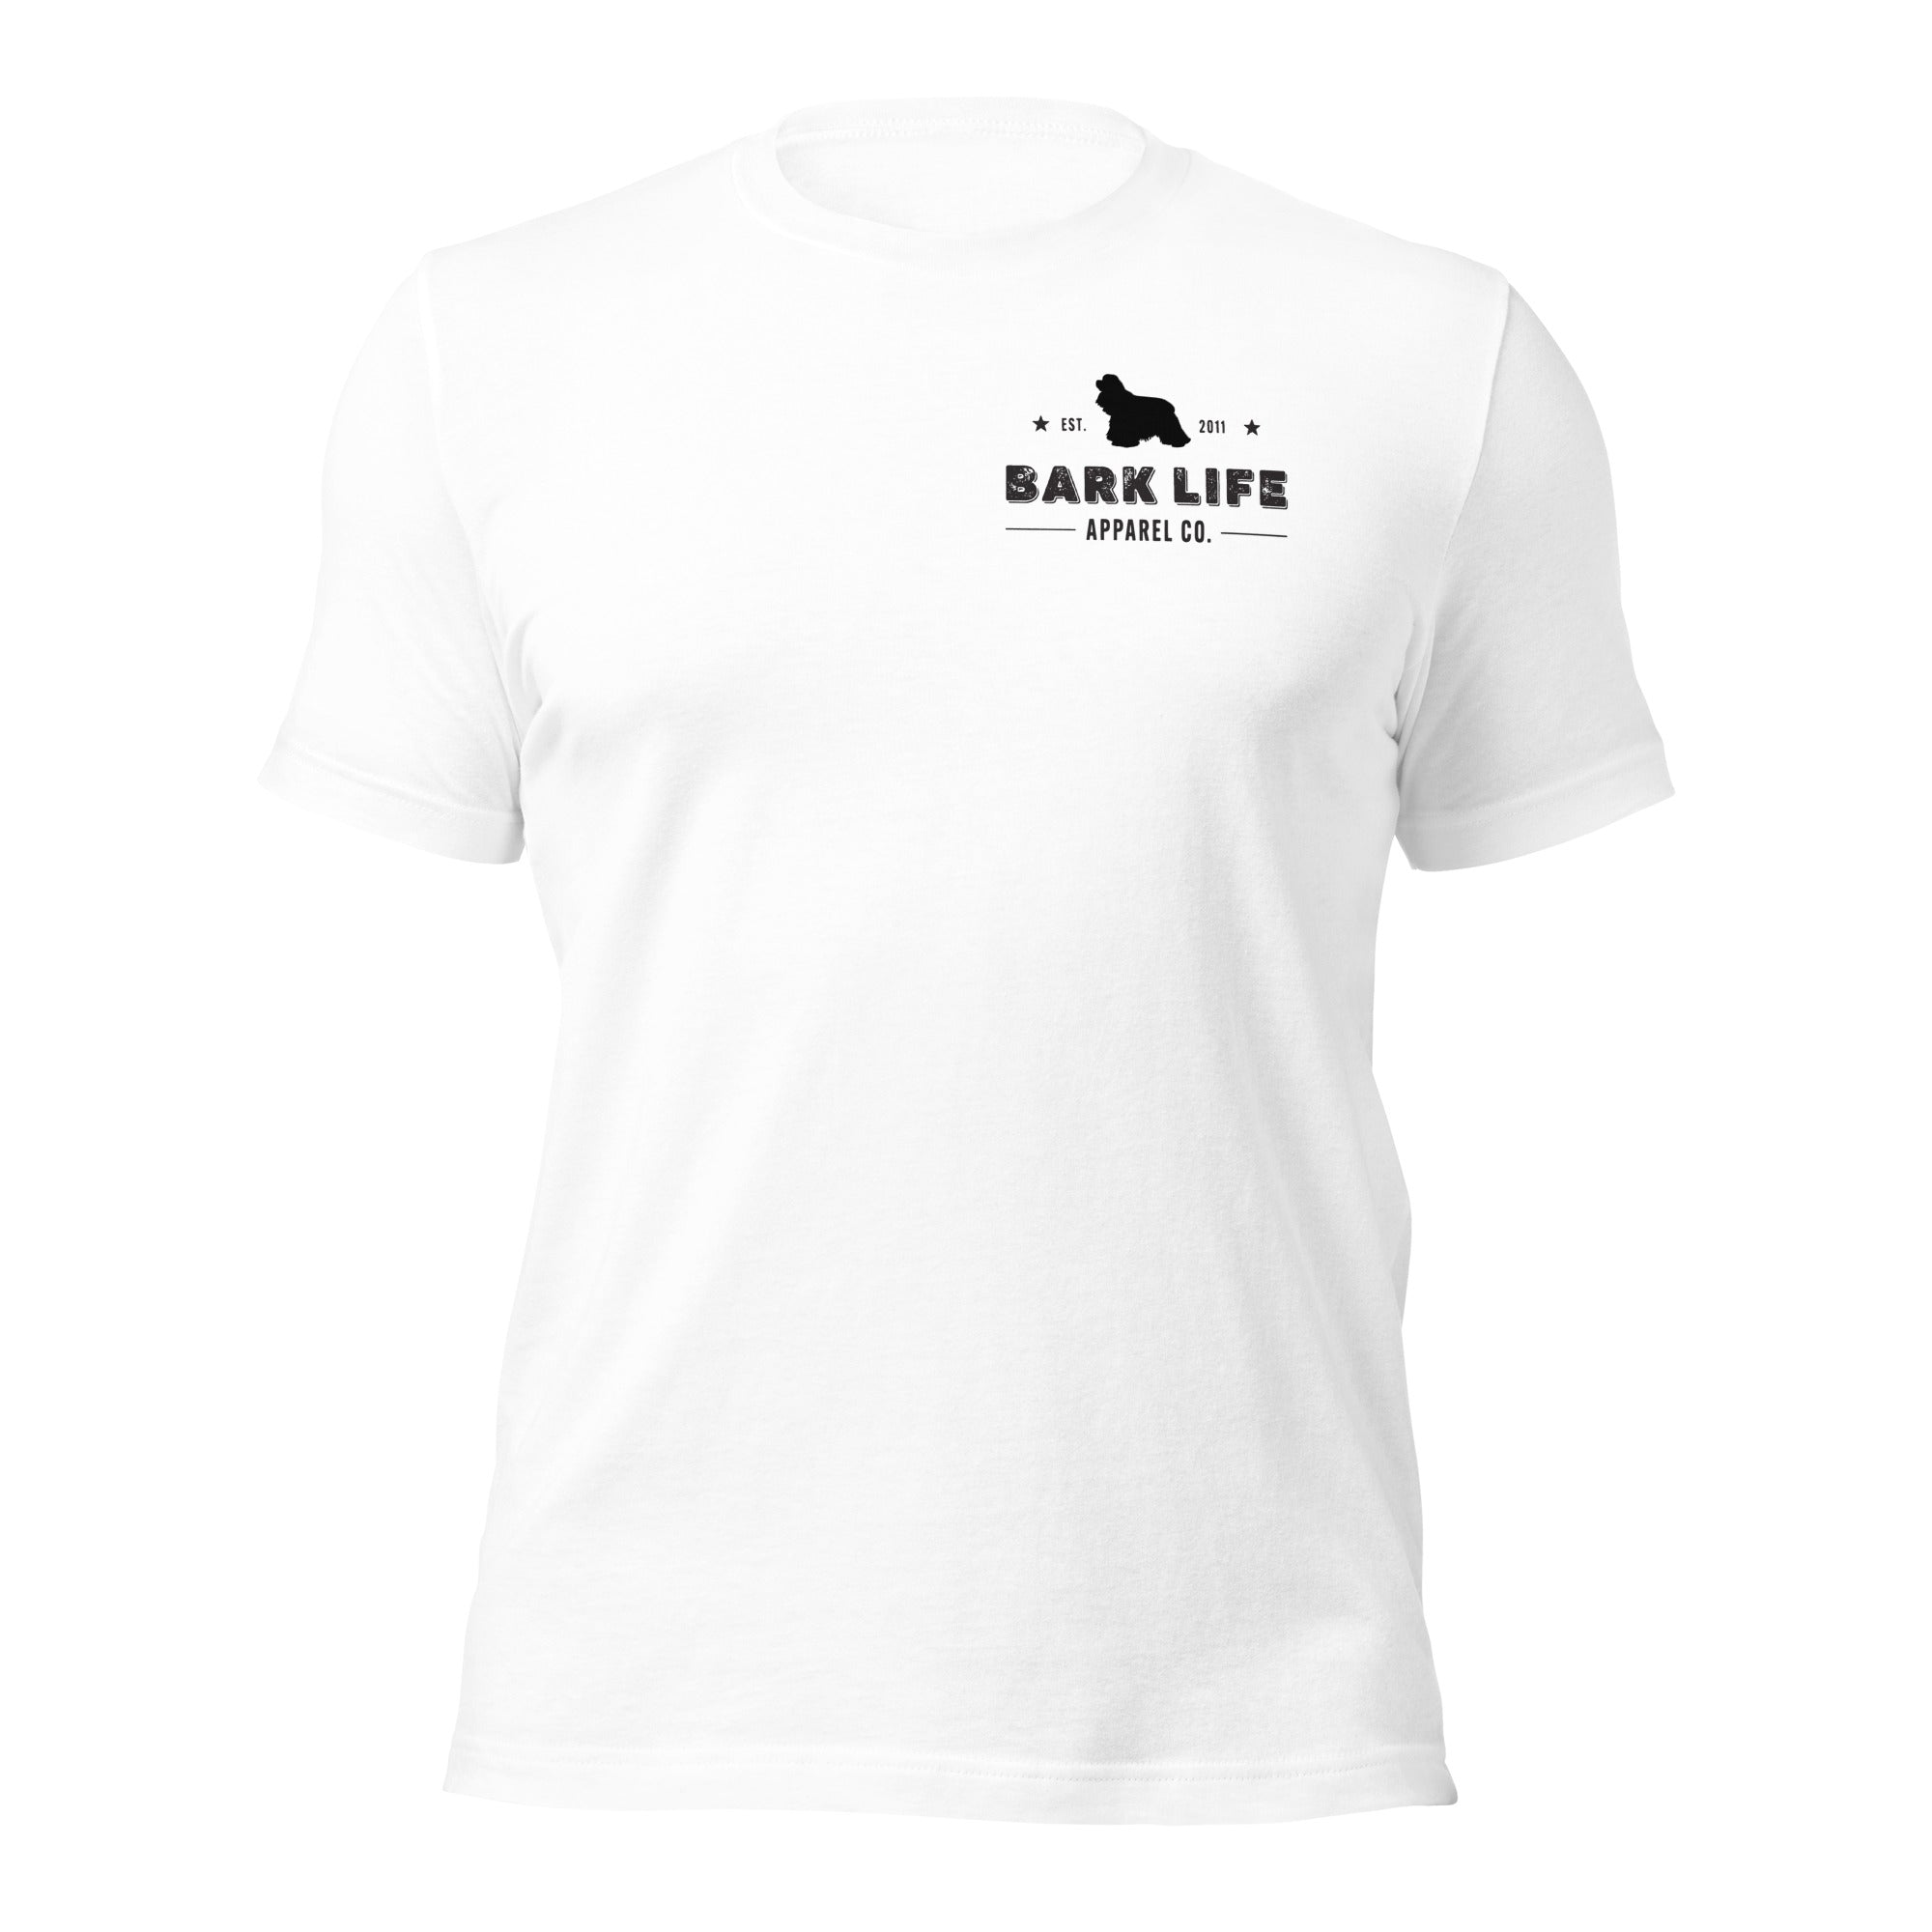 Cocker Spaniel - Short Sleeve Cotton Tee  Shirt